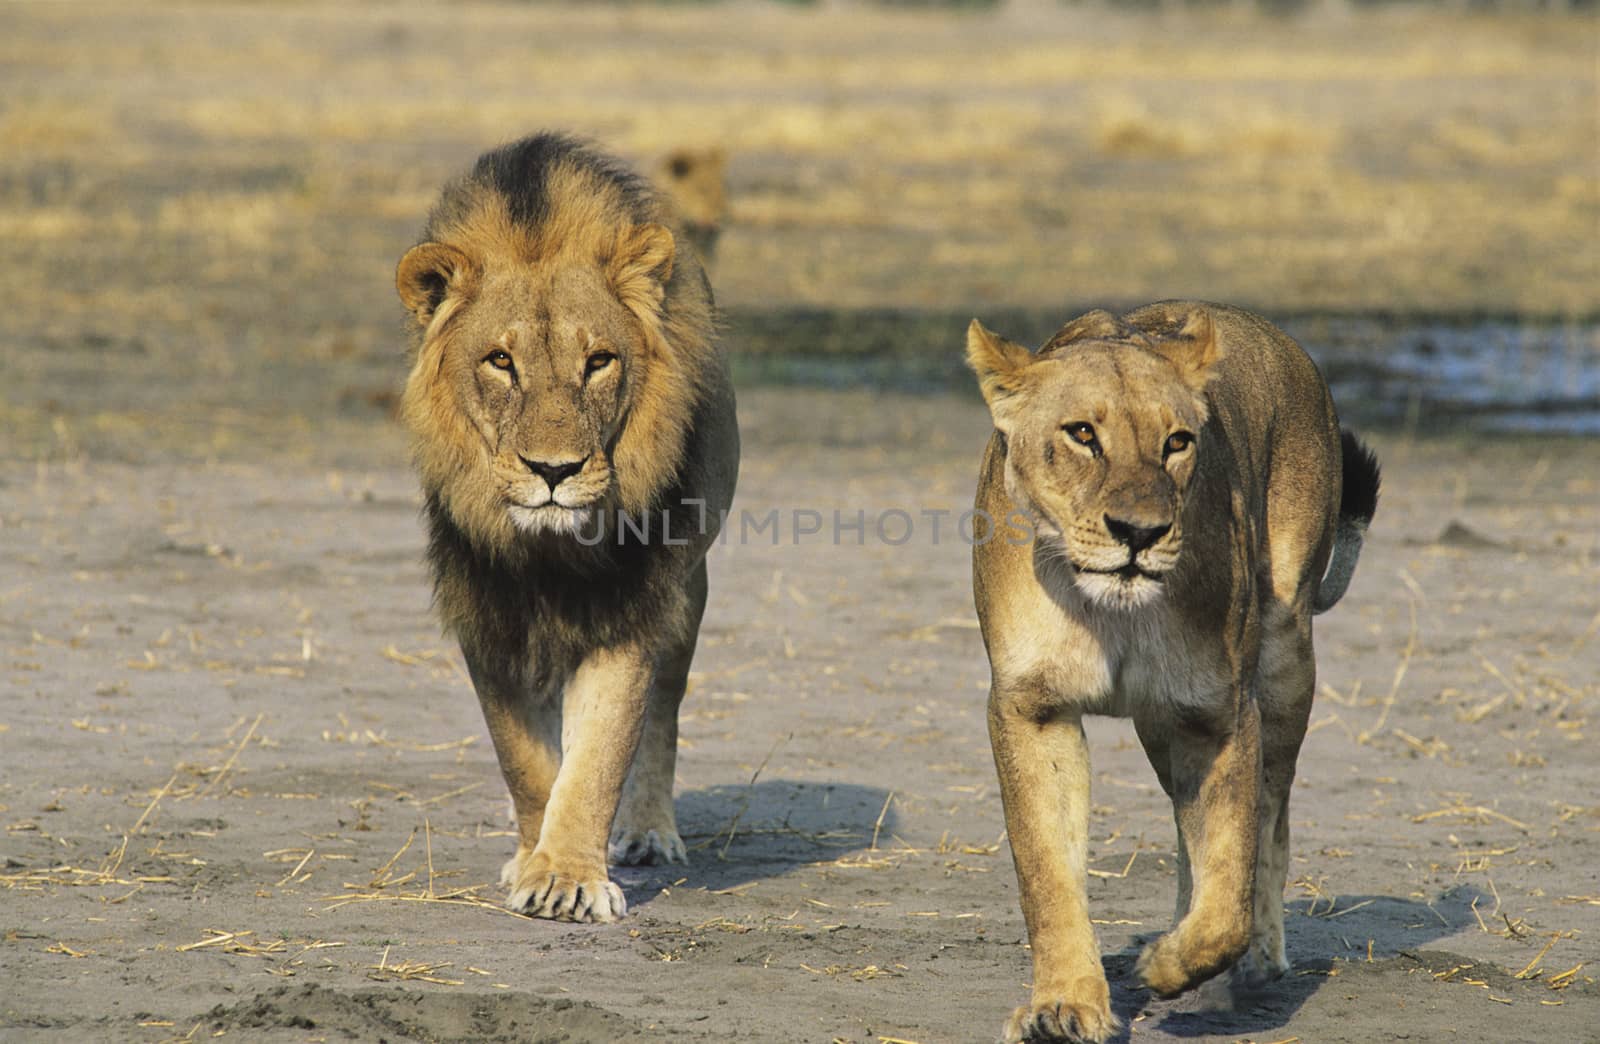 Pair of lions walking